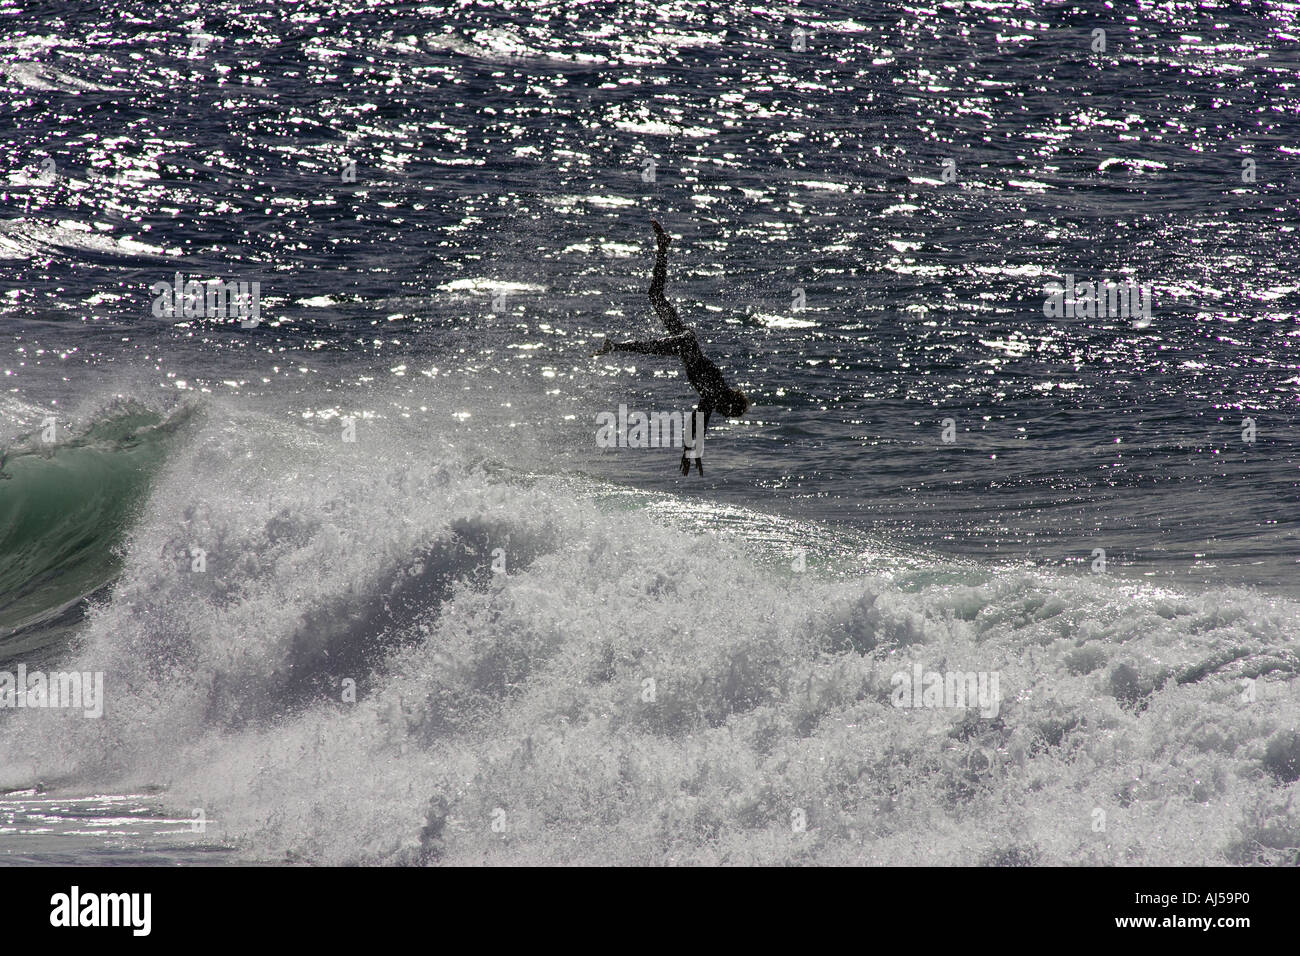 Surfer dives over wave Stock Photo